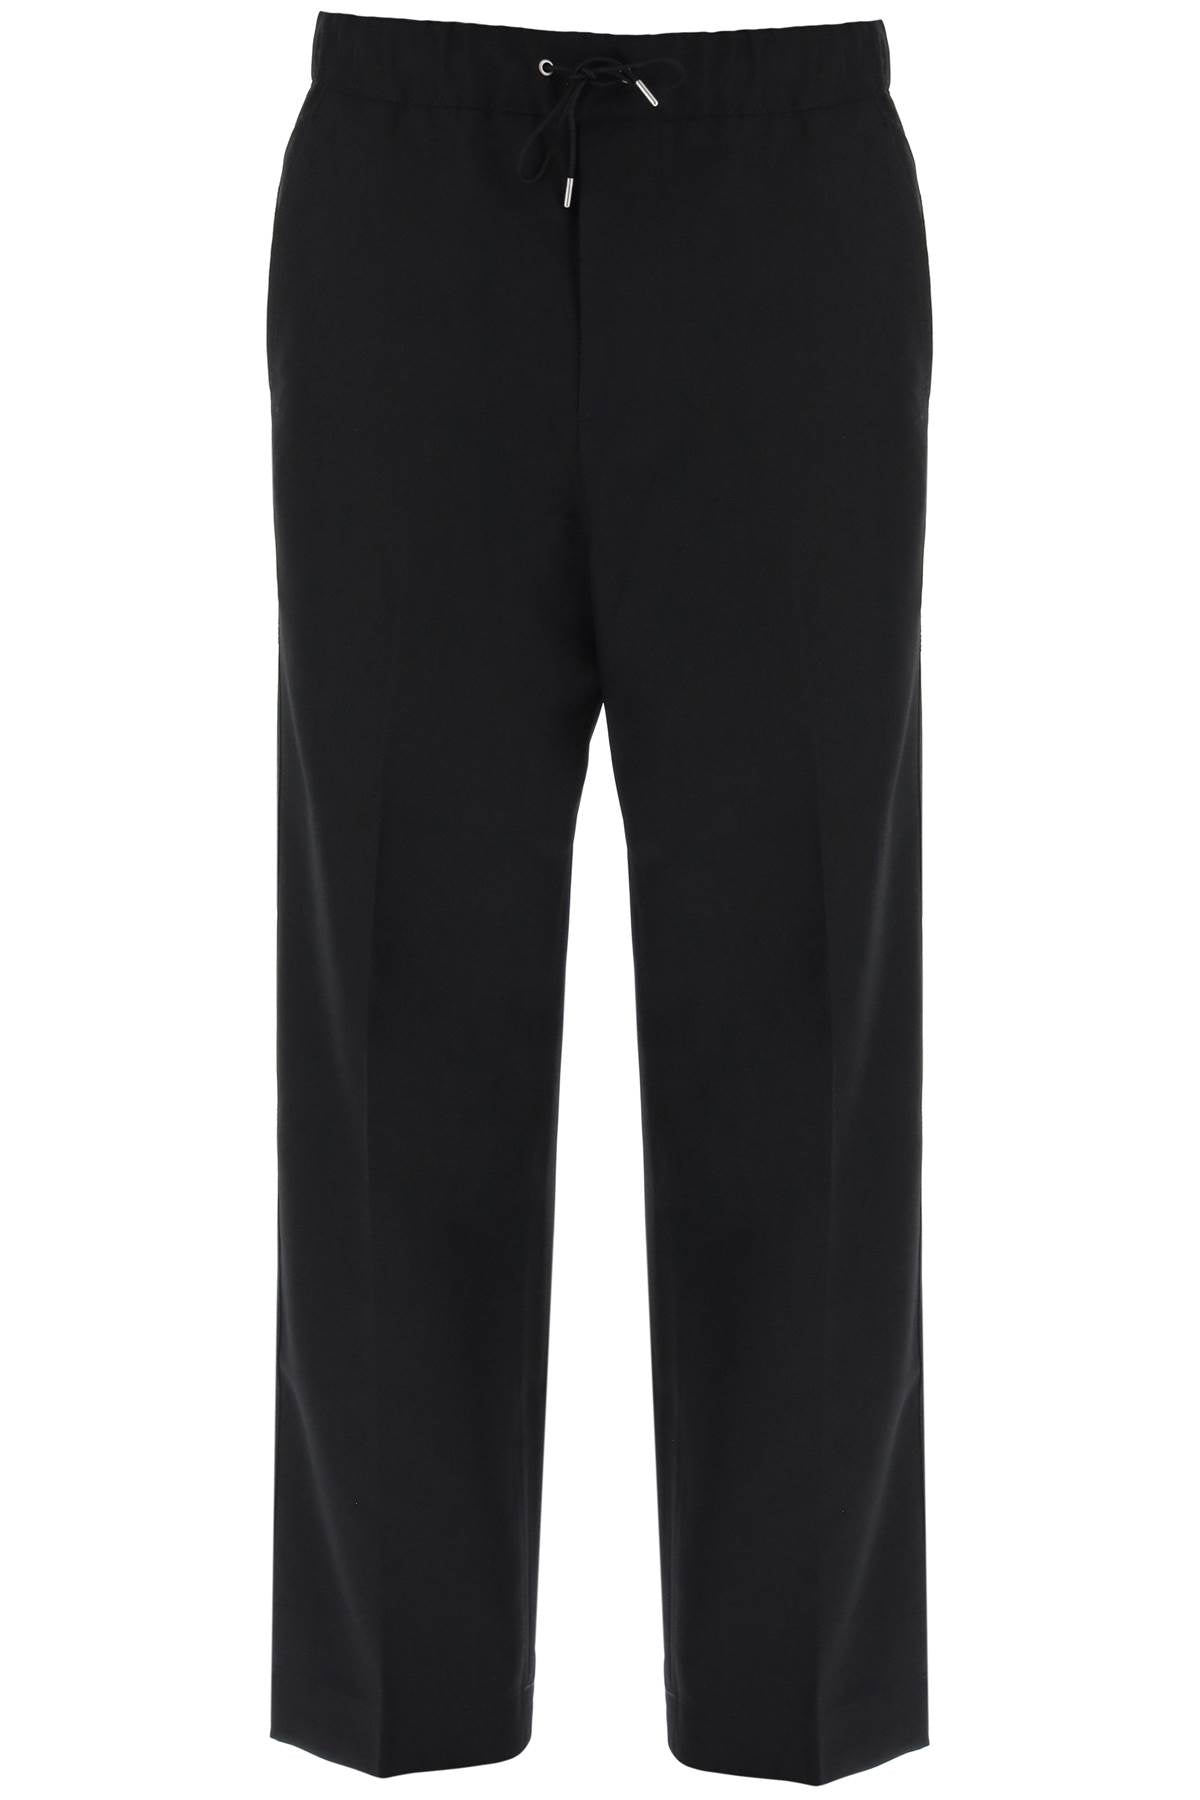 Oamc pants with elasticated waistband-0